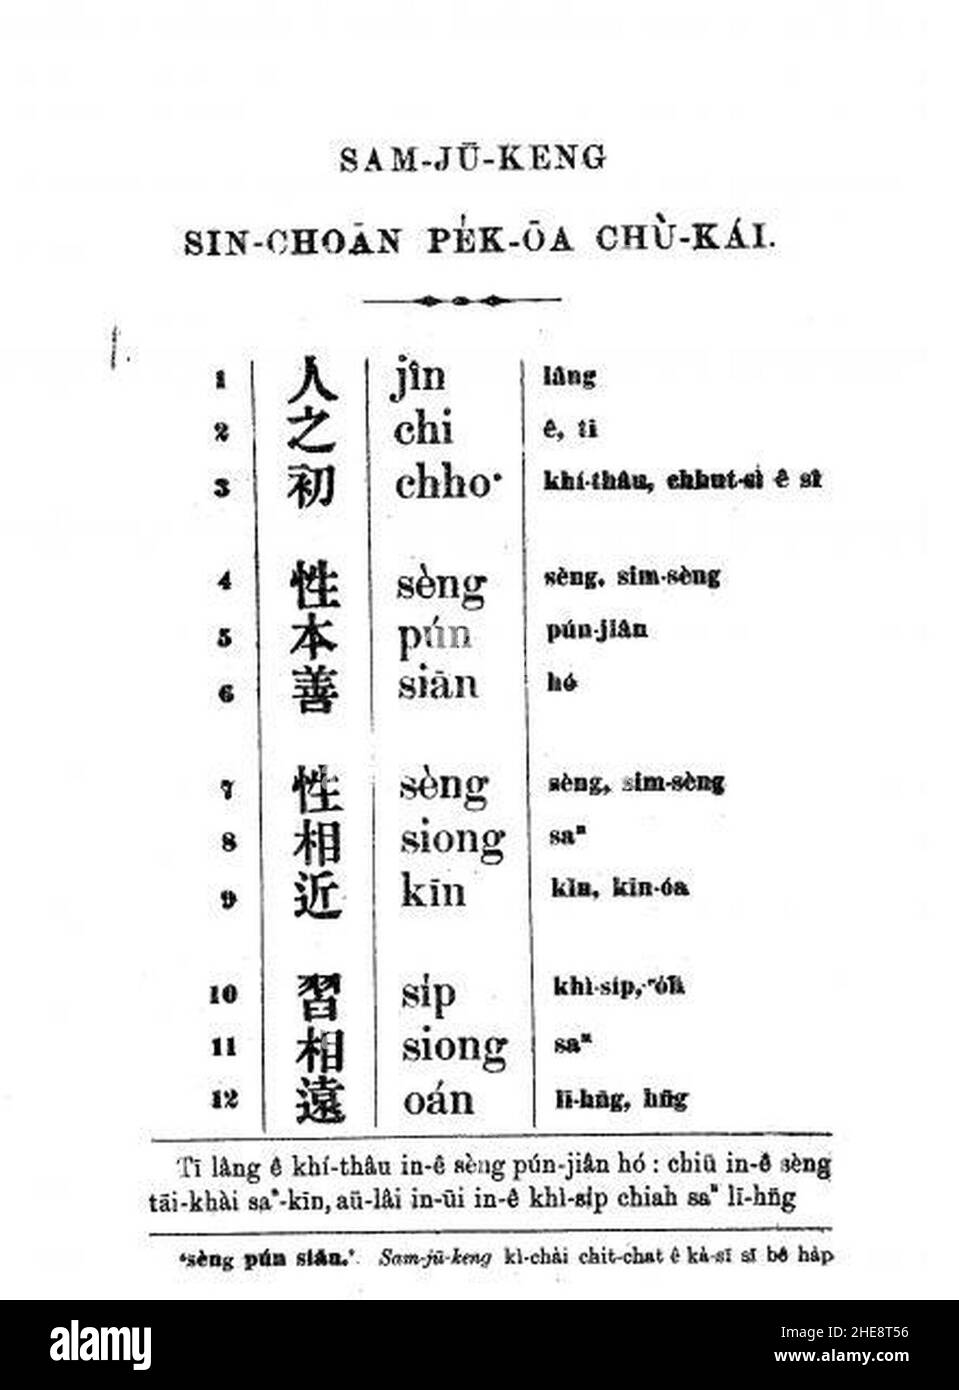 Sam-ju-keng Sin-choan Pek-oa Chu-kai Seite 6. Stockfoto